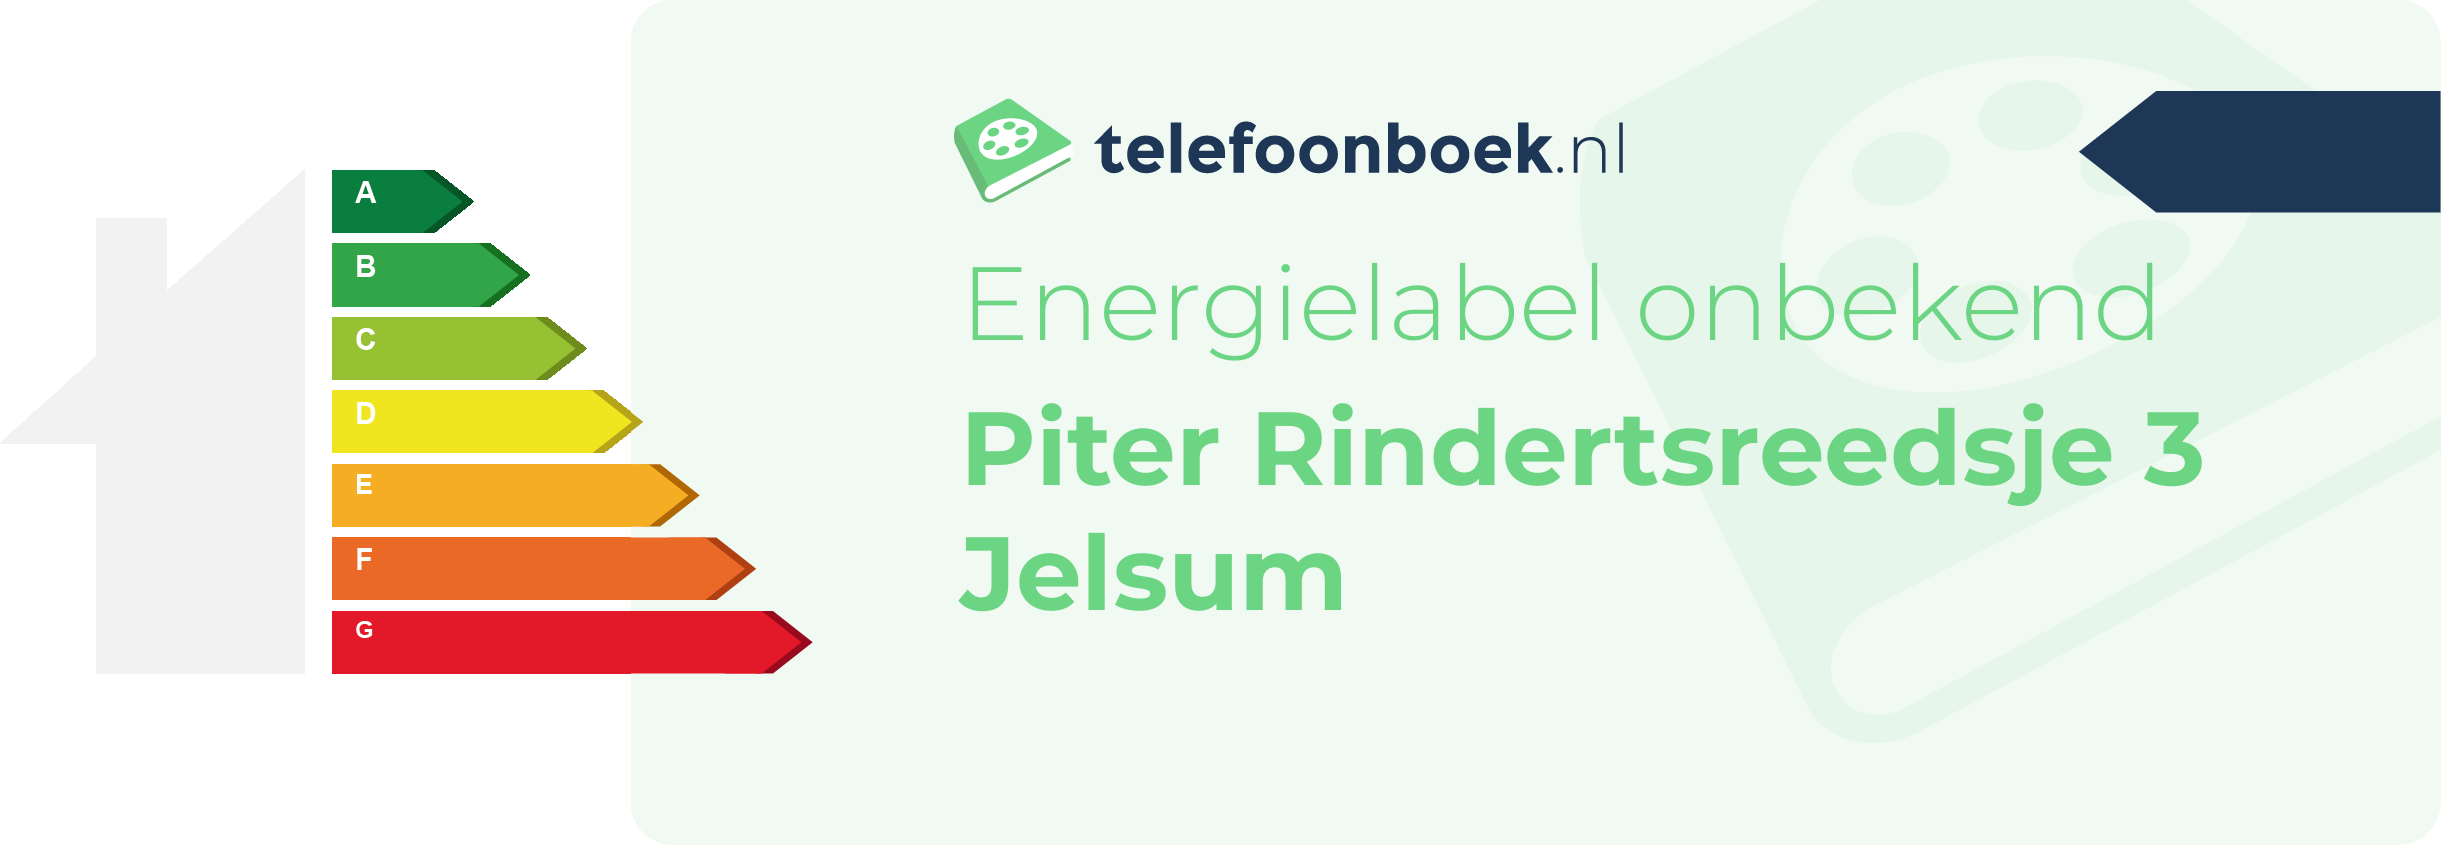 Energielabel Piter Rindertsreedsje 3 Jelsum